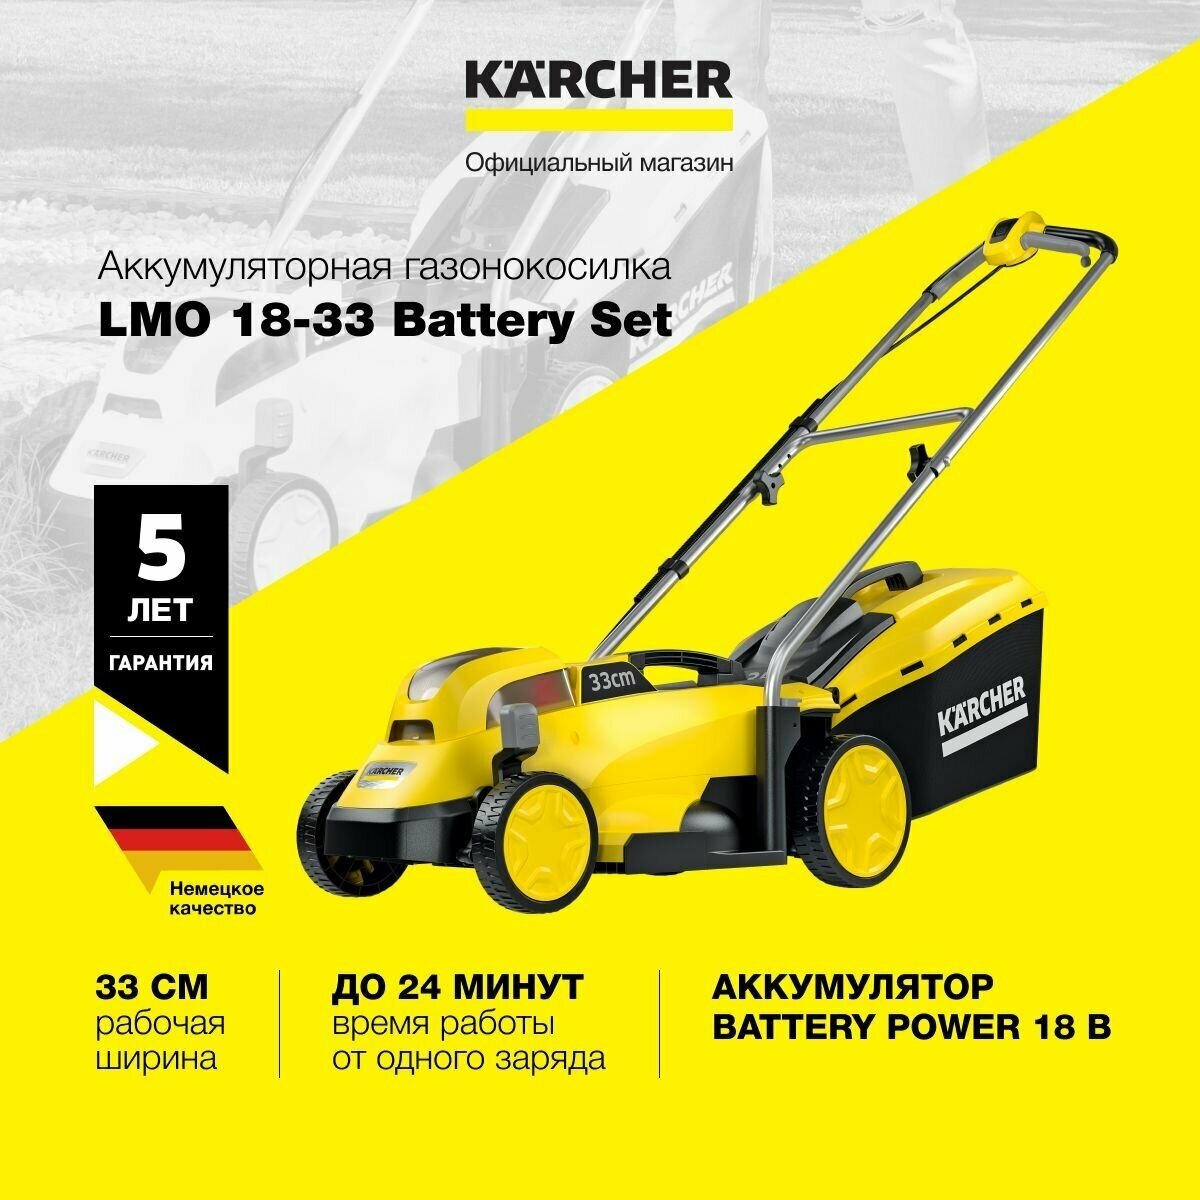 Аккумуляторная газонокосилка Karcher LMO 18-33 BATTERY SET